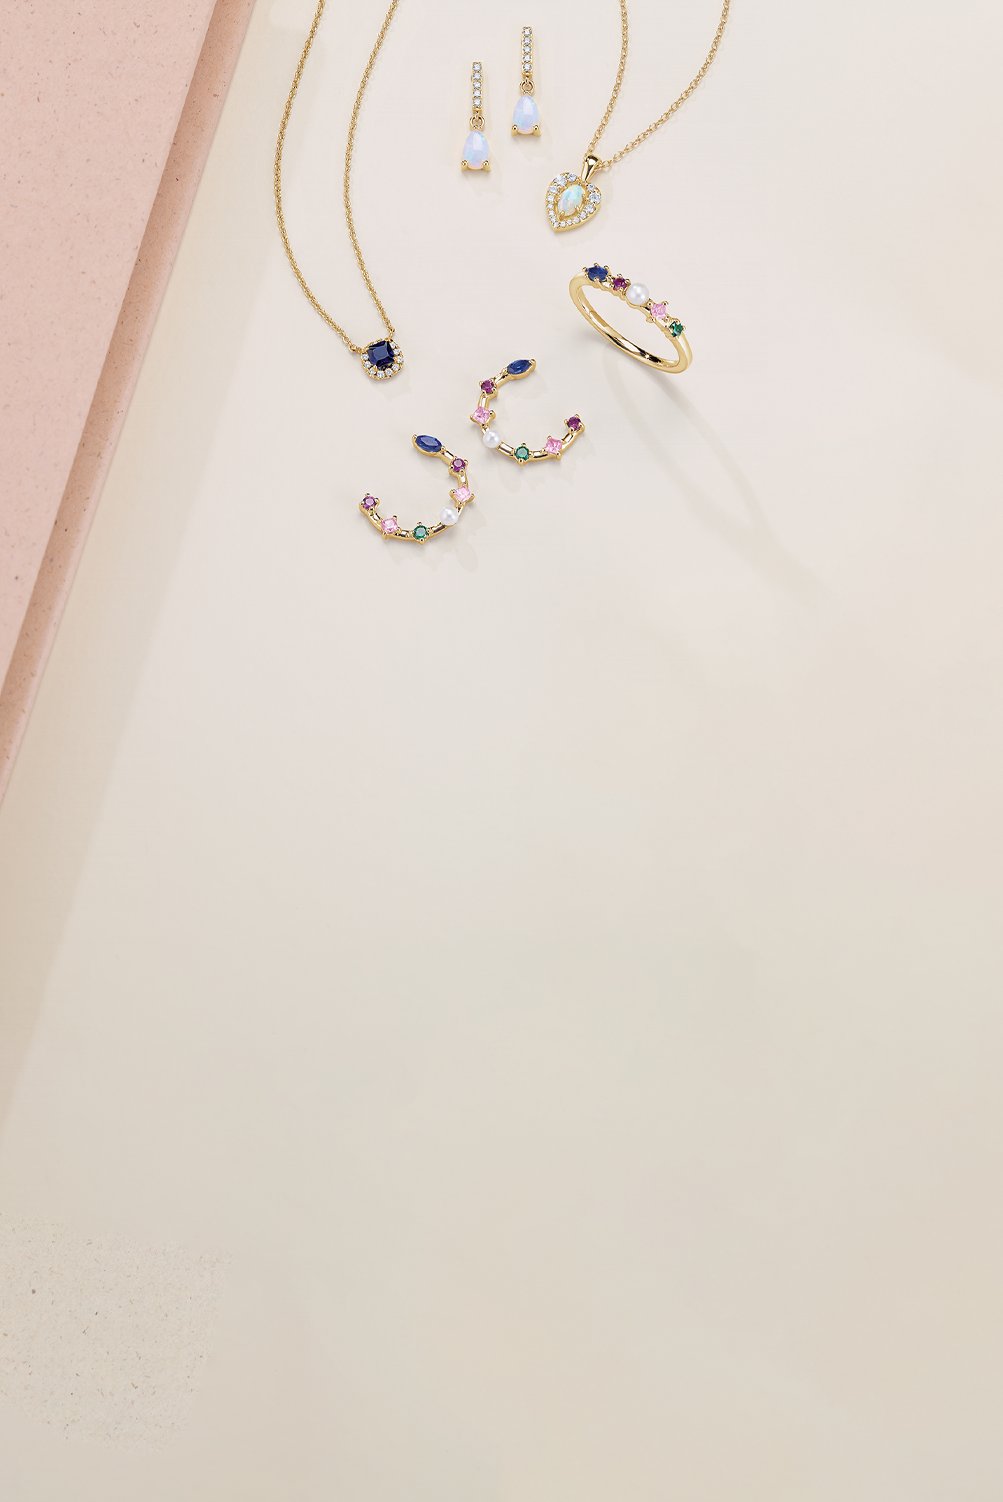 Colorful Gemstone Jewelry